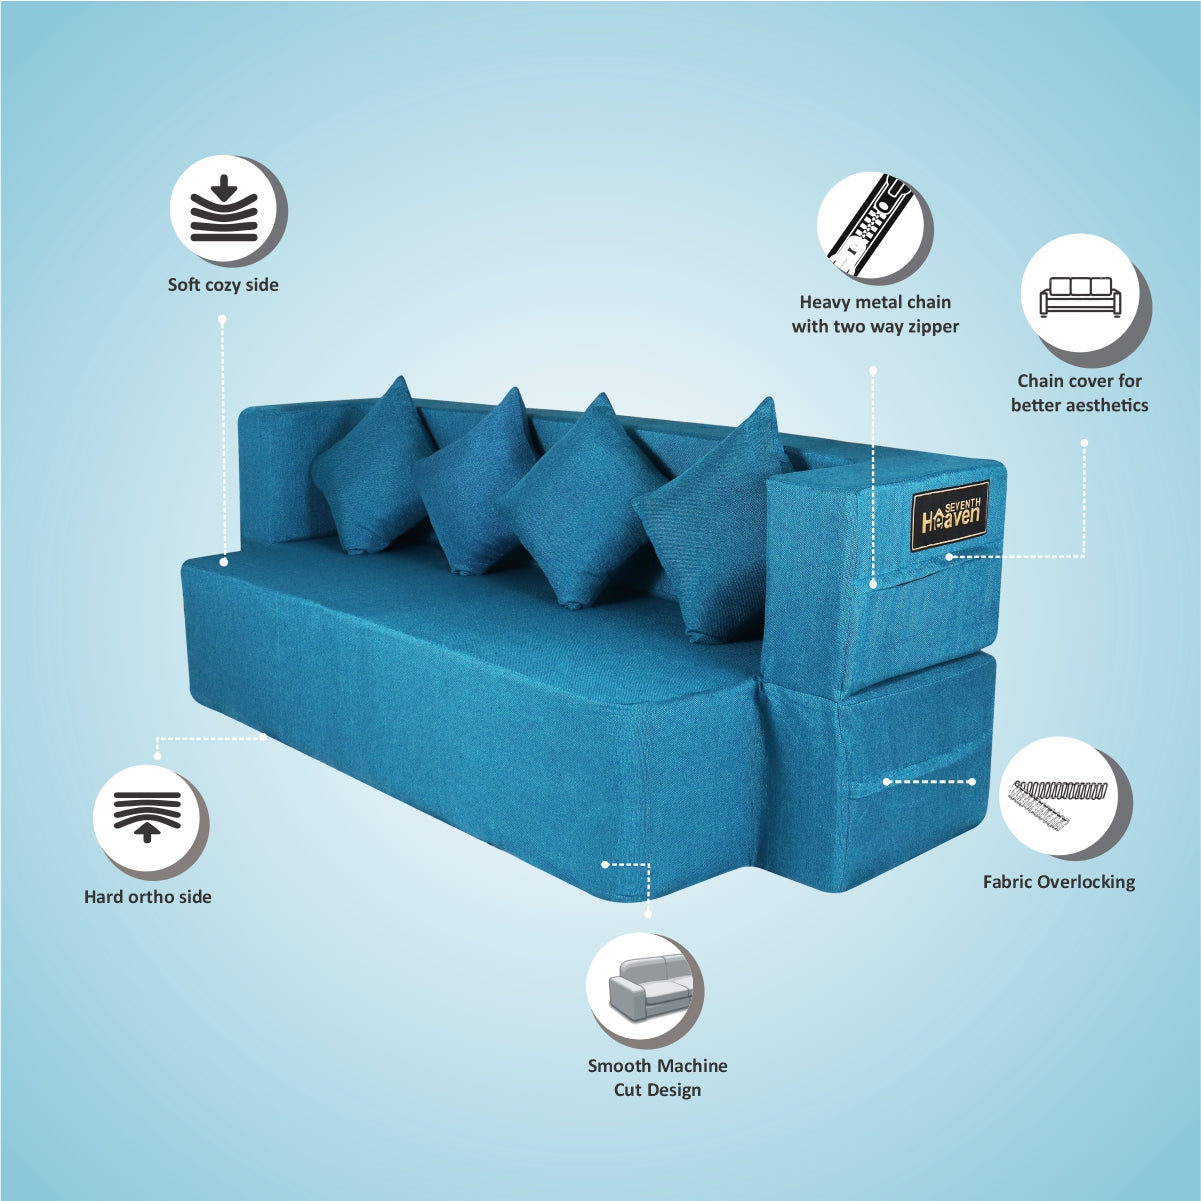 Blue Jute Fabric (78"x36"x14") FlipperX Sofa cum Bed with 4 Same Cushions